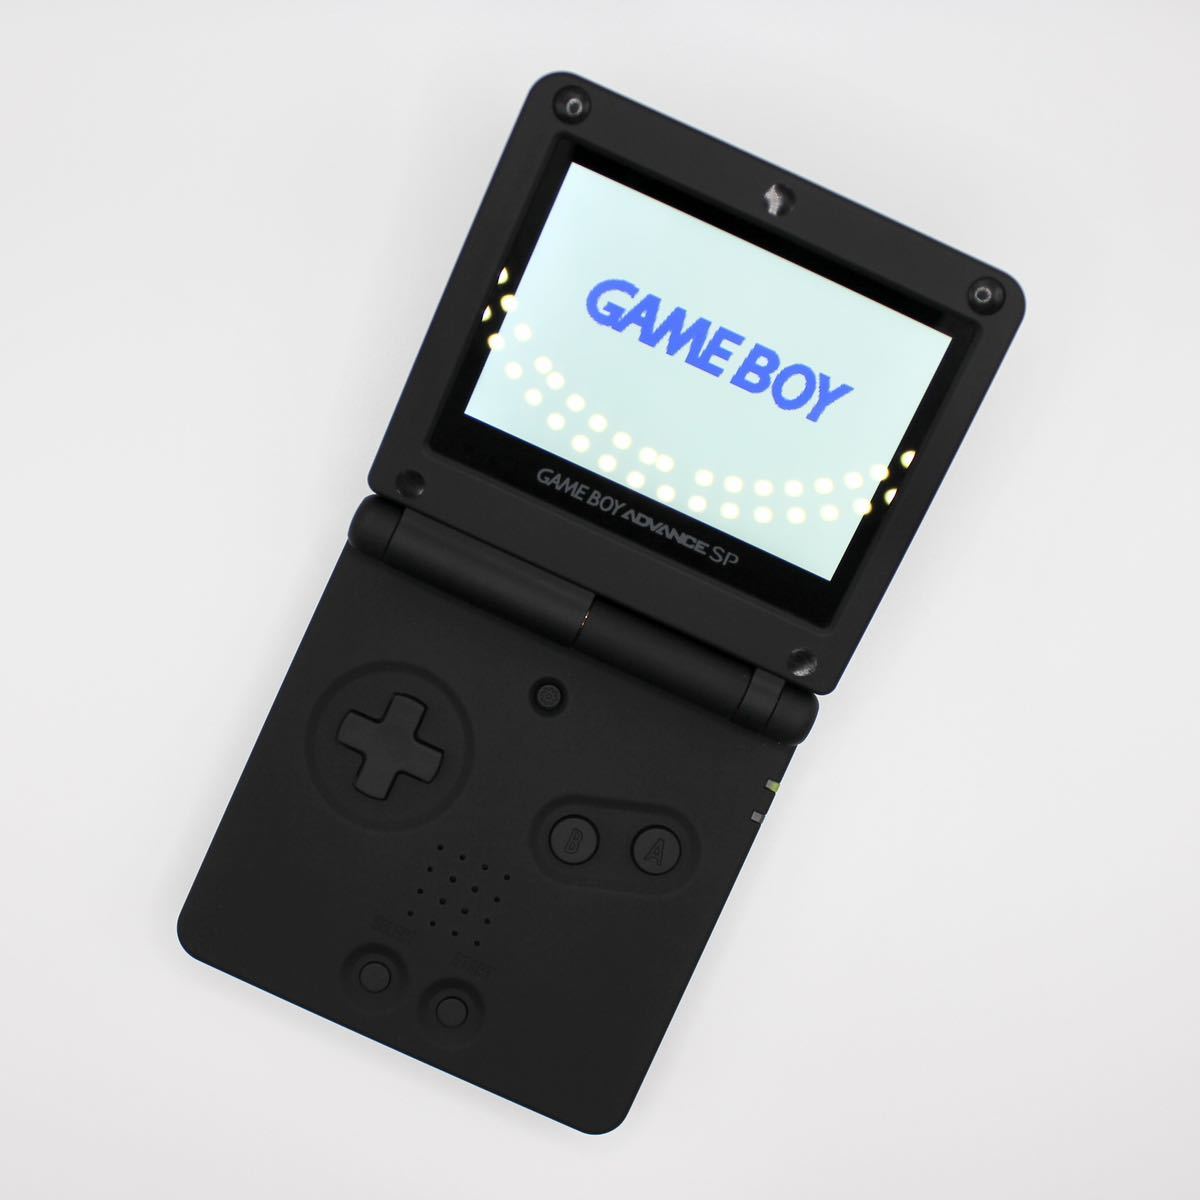  Game Boy Advance SP body IPS V7 backlight liquid crystal installing 014